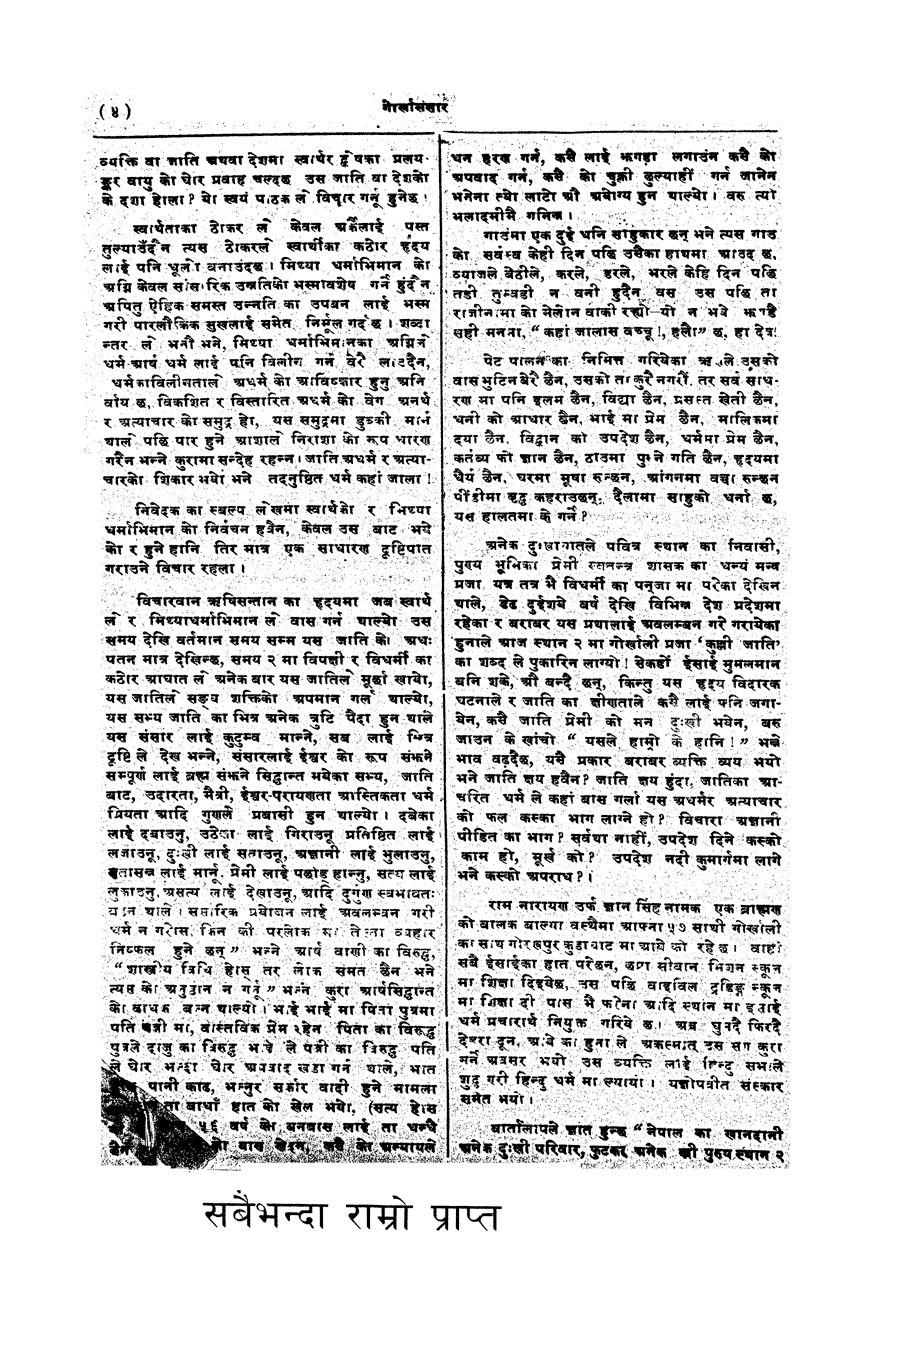 Gorkha Sansar, 6 Mar 1928, page 4